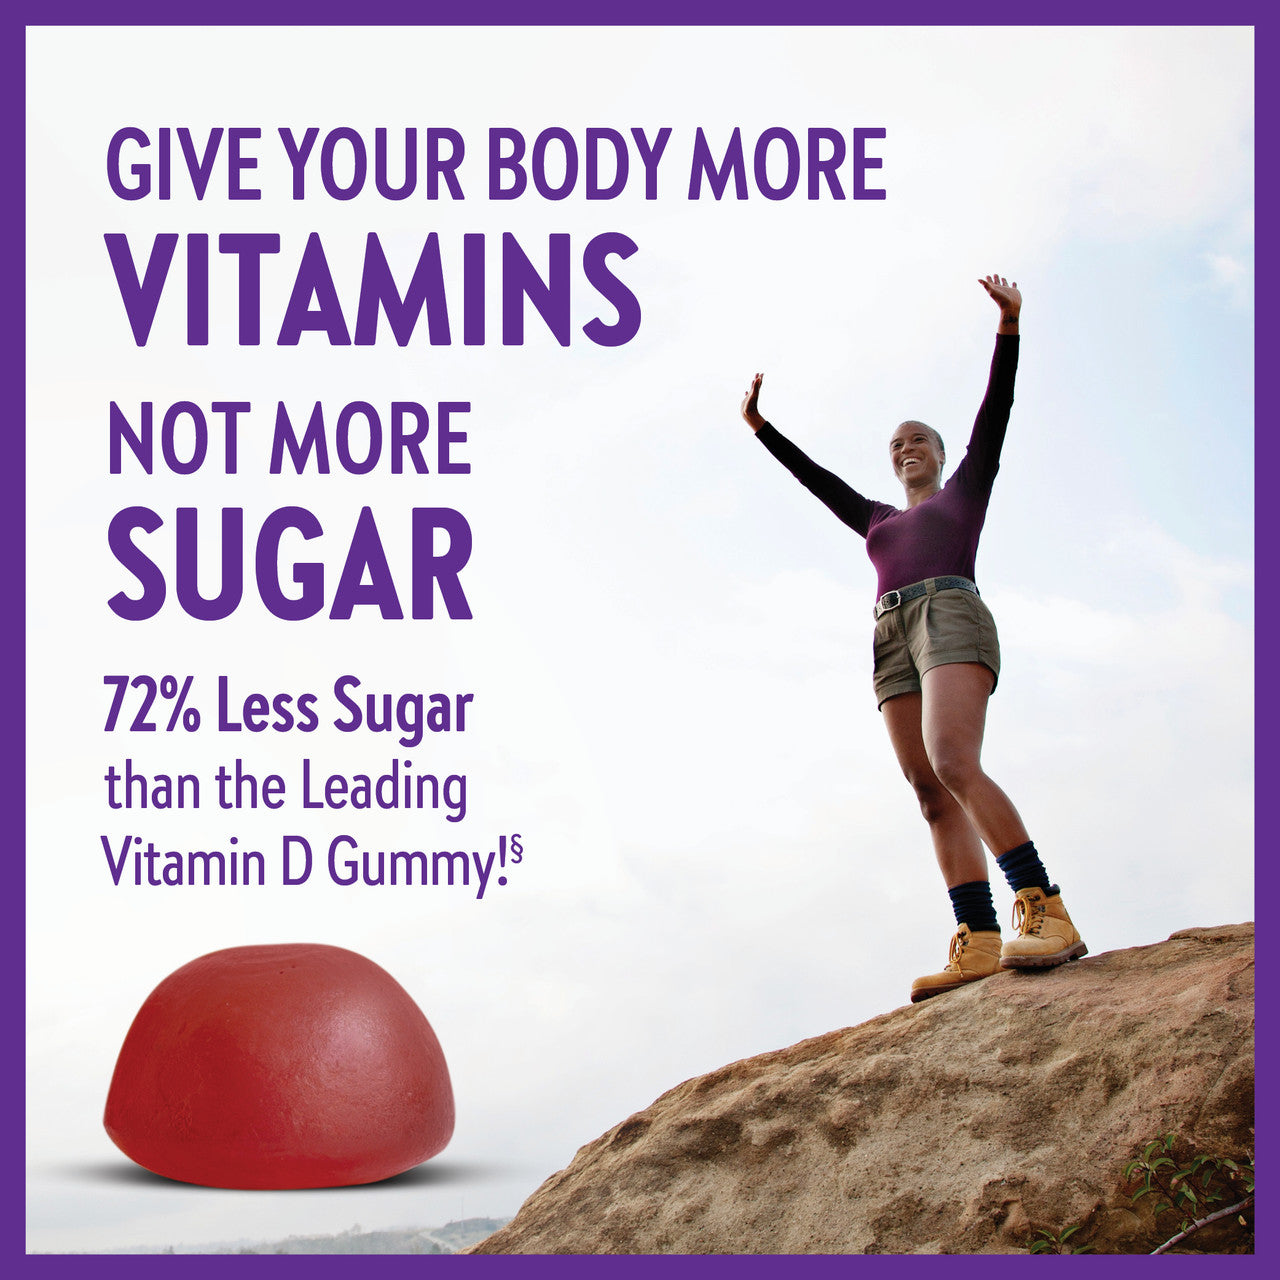 Strength Support Vitamin D3+ Gummies